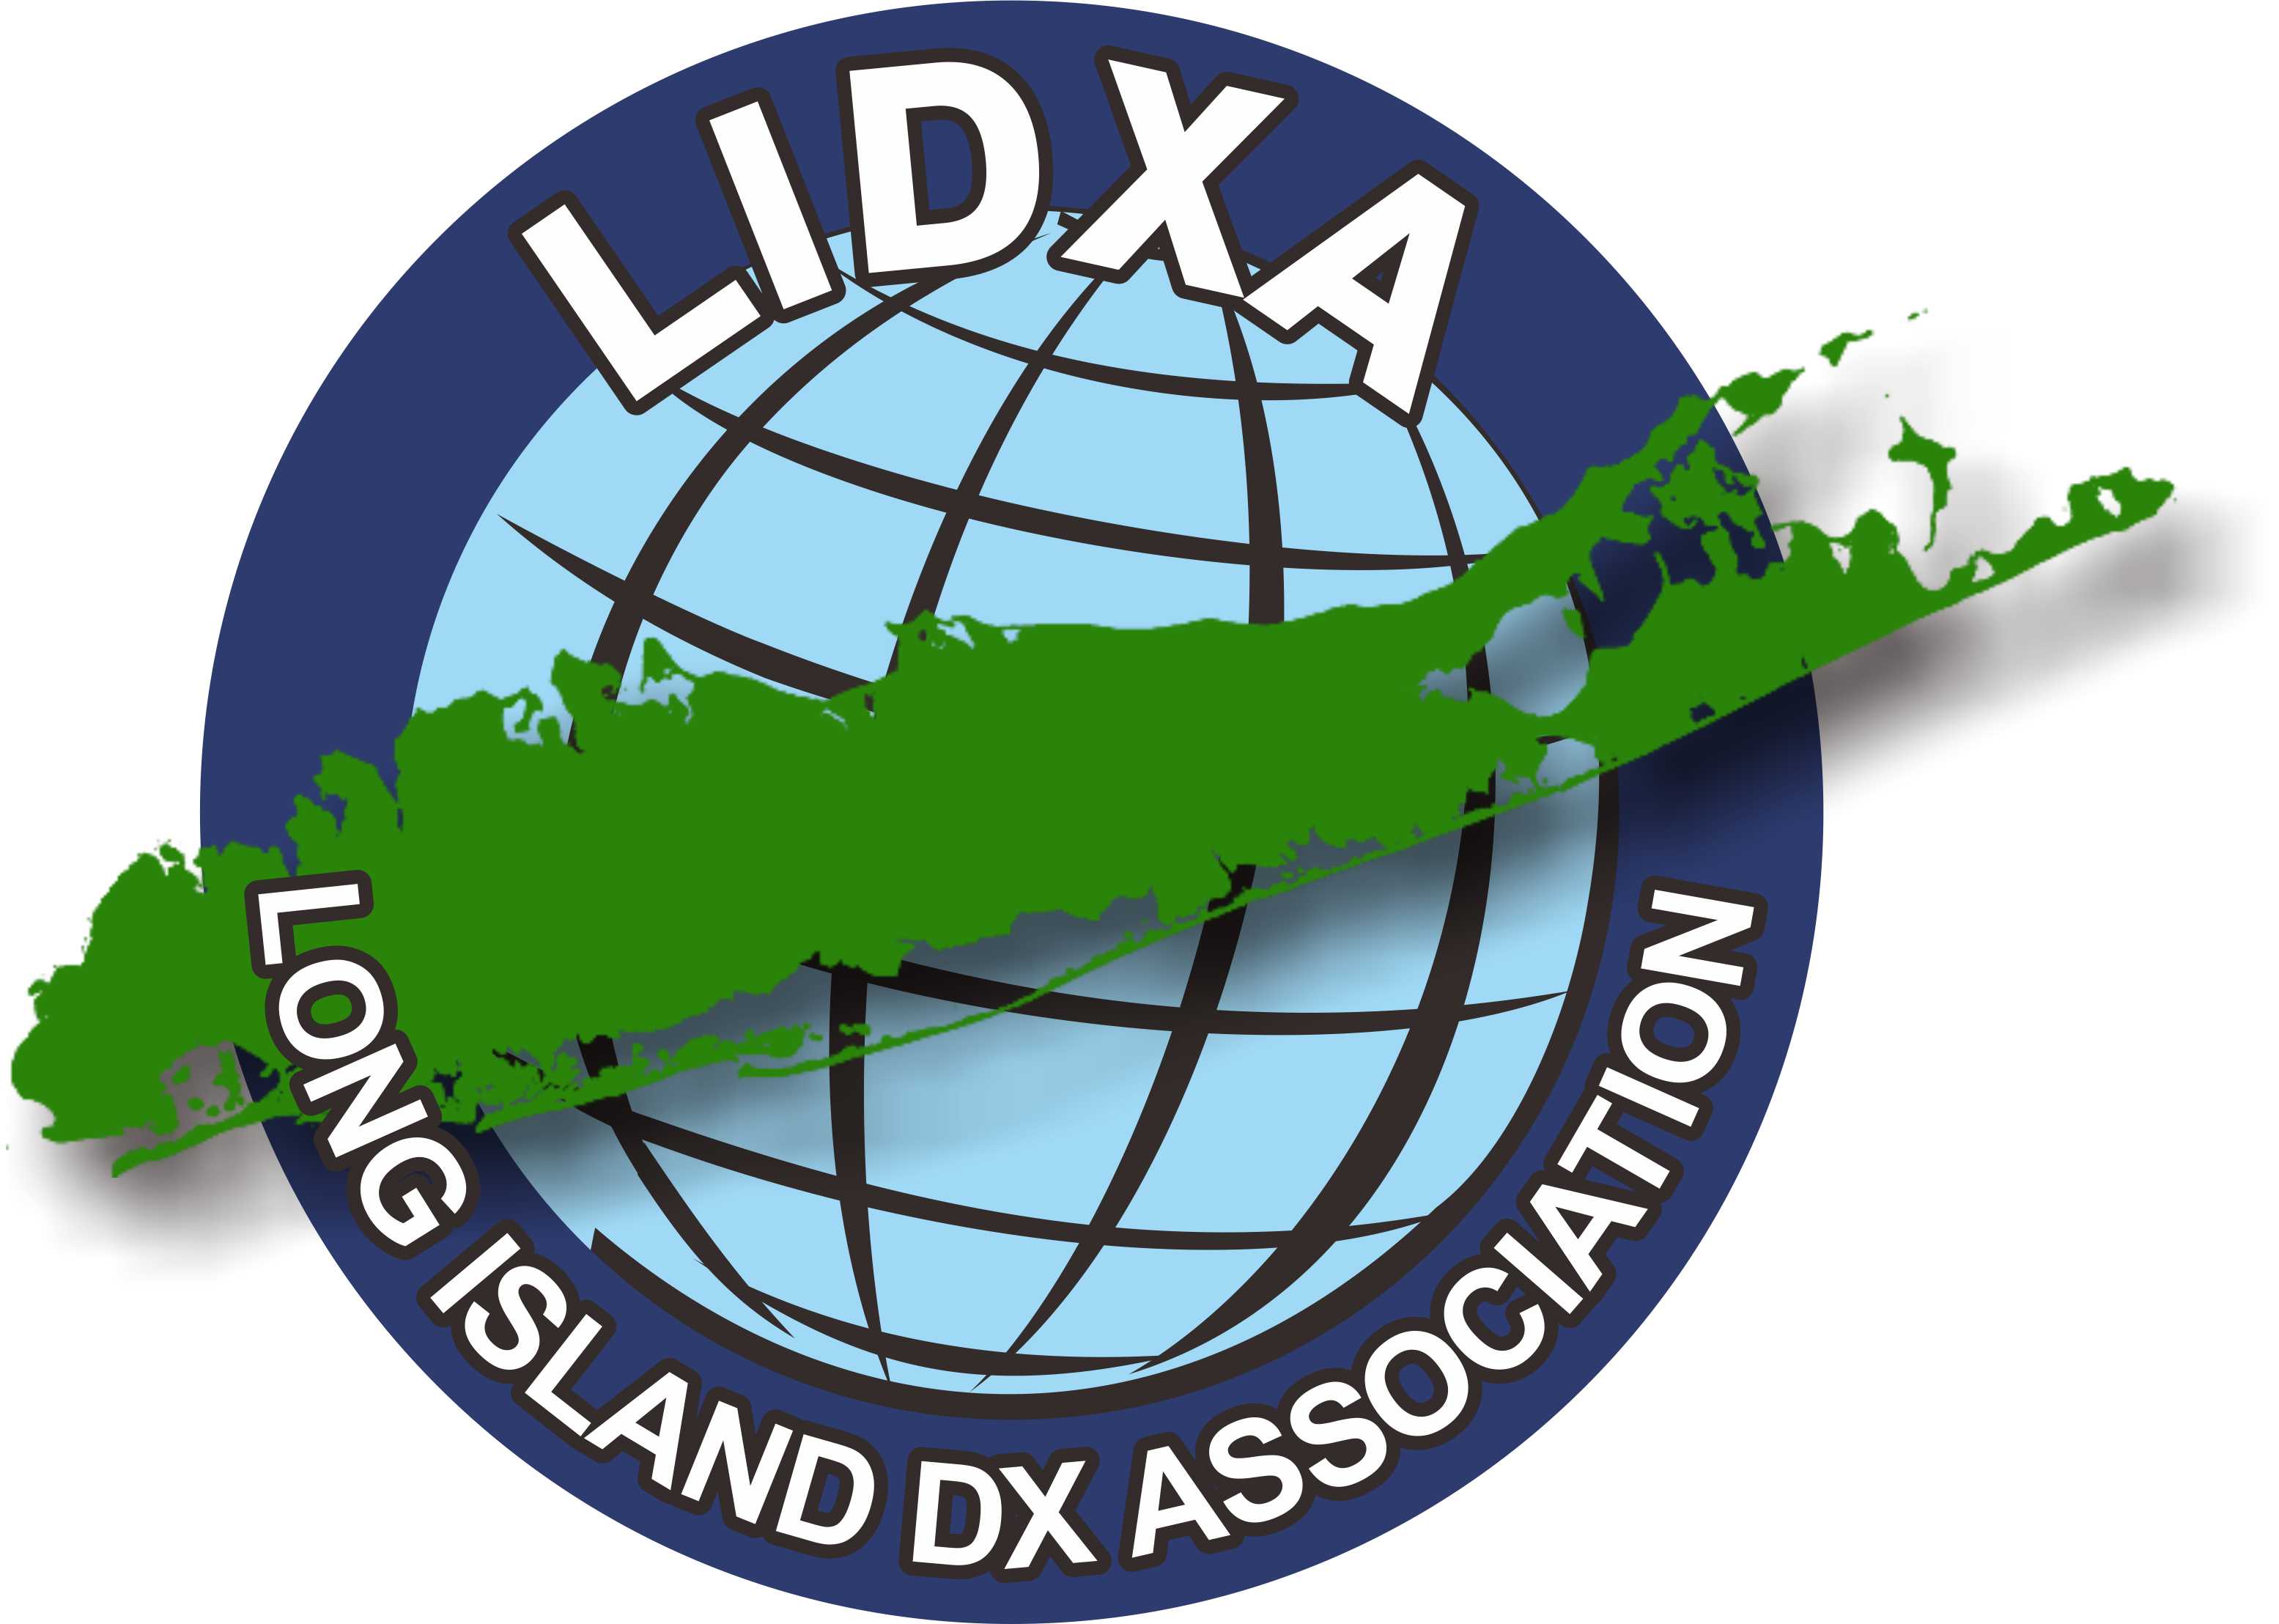 LIDXA logo will appear momentarily.